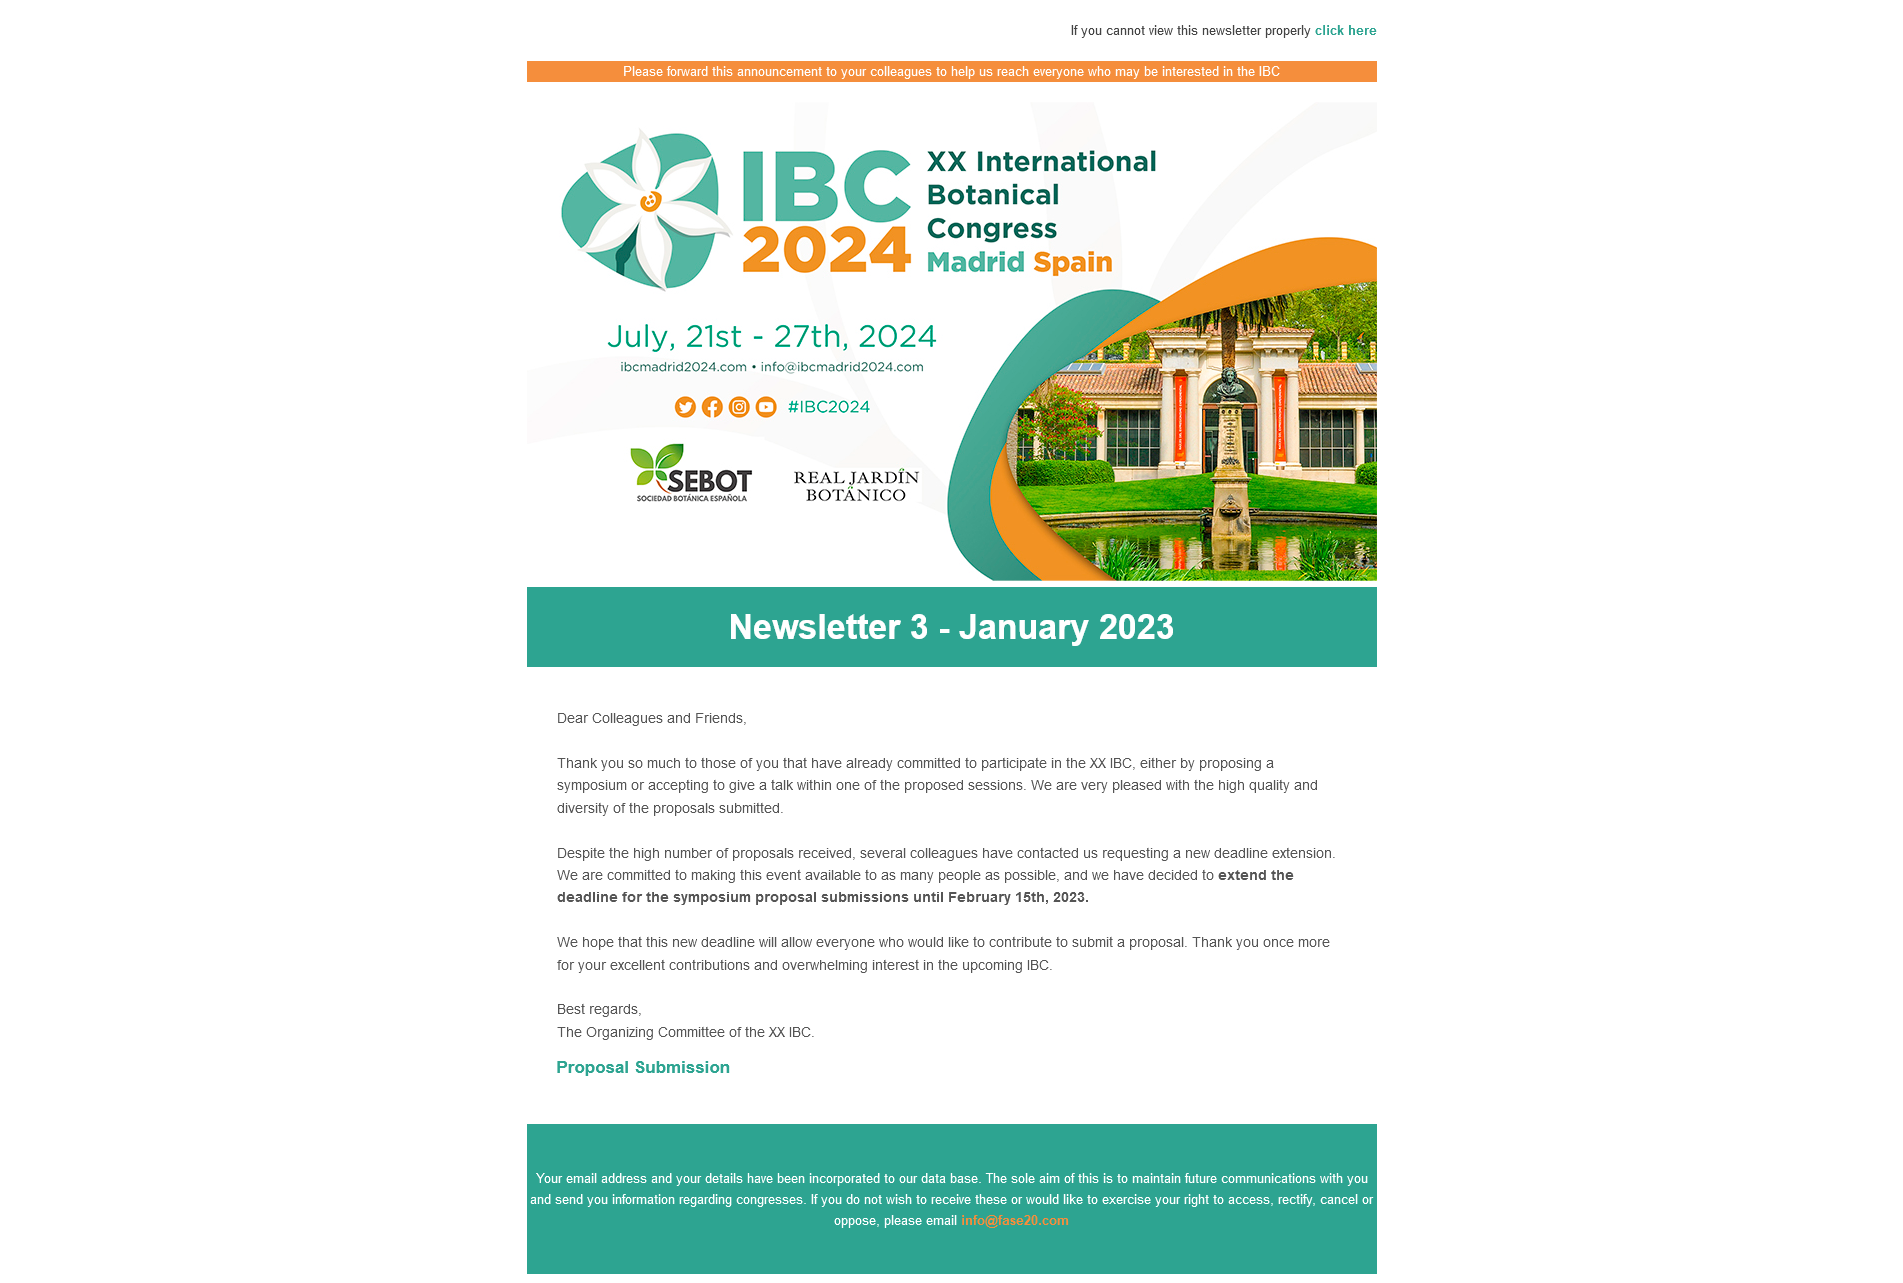 XX INTERNATIONAL BOTANICAL CONGRESS MADRID 2024 - Newsletter 3